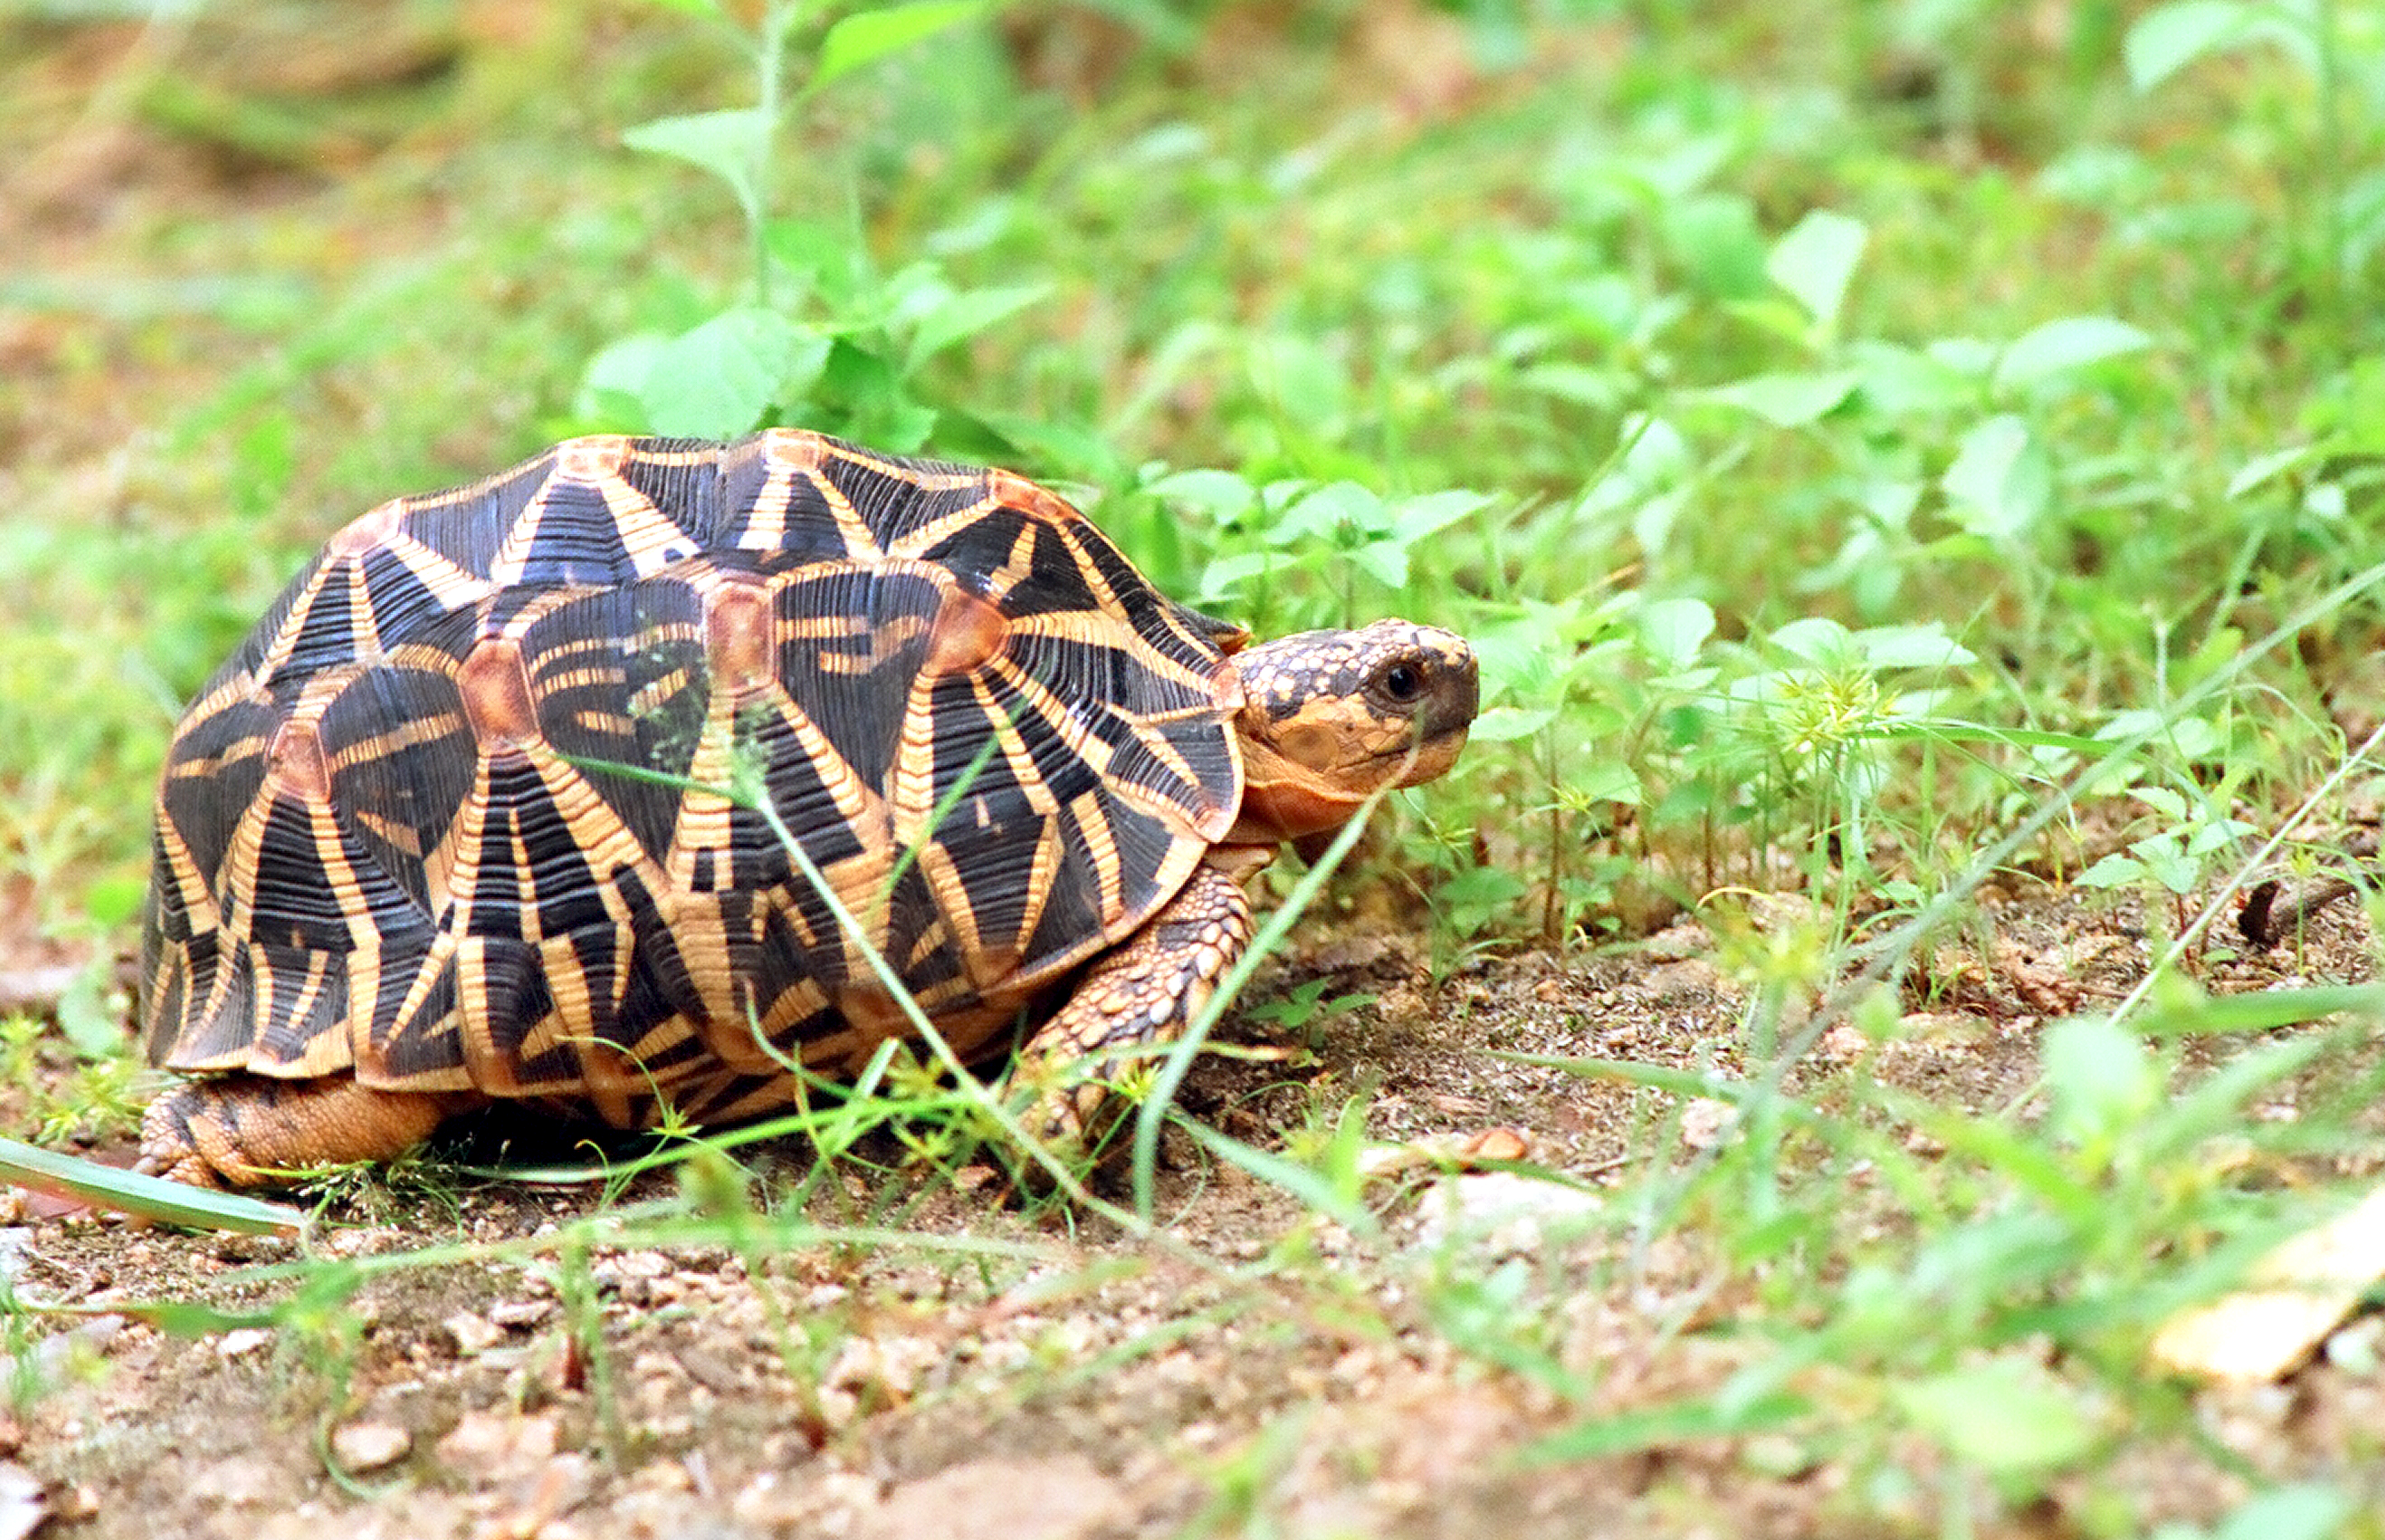 File:Indian star tortoise by N. A. Naseer.jpg - Wikimedia Commons